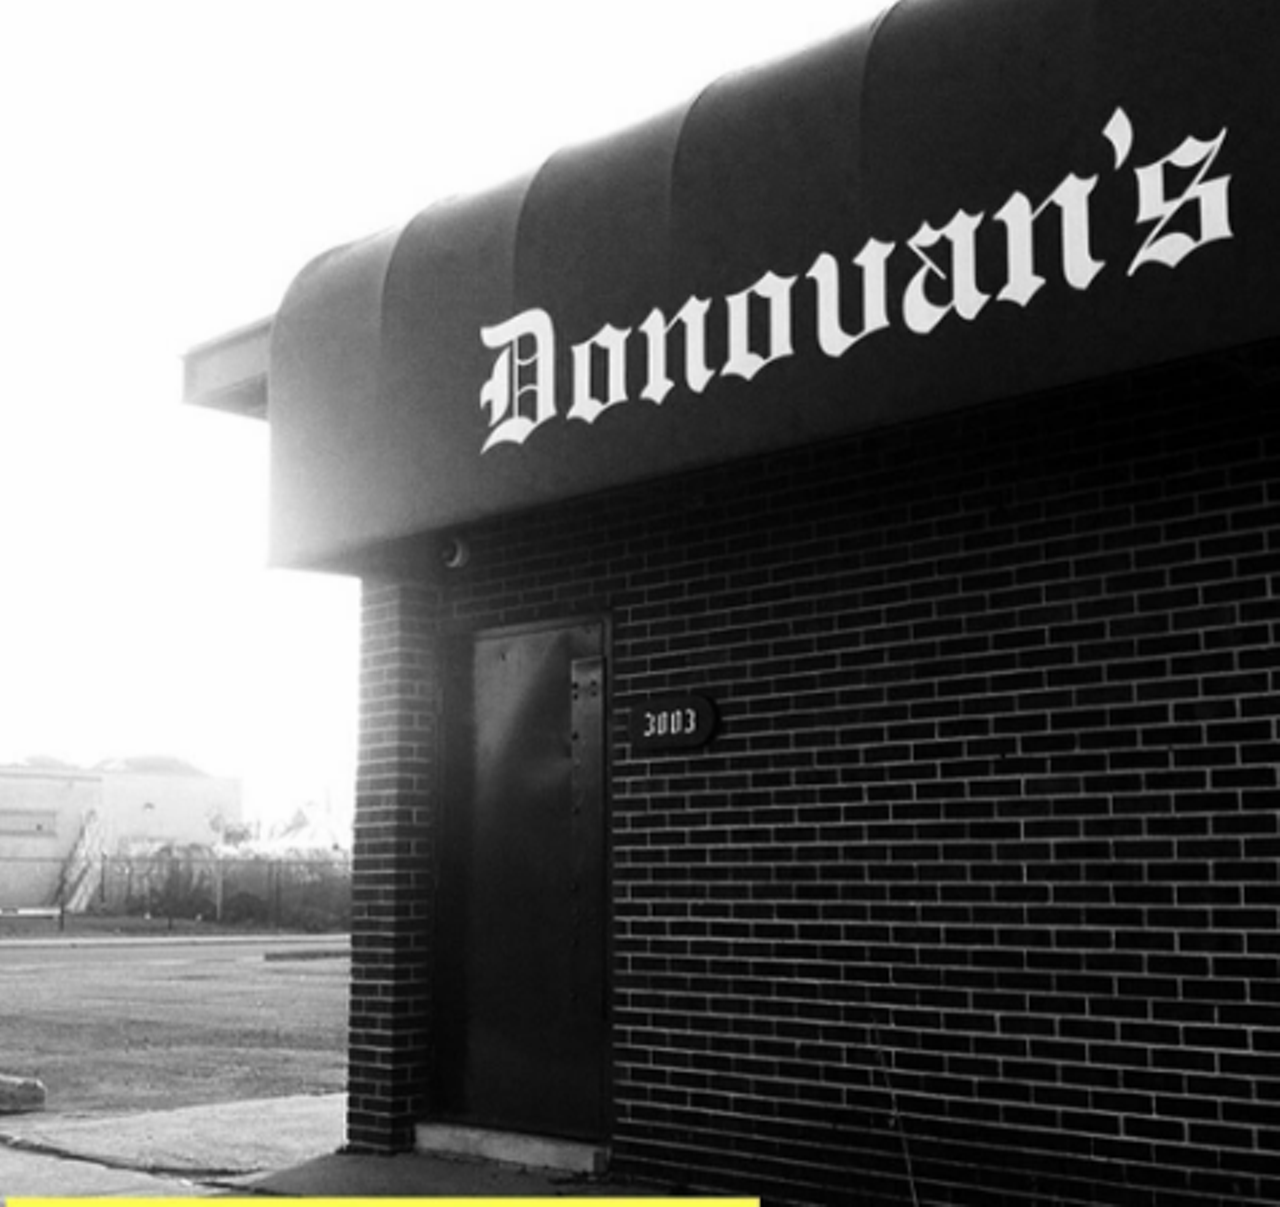 Donovans Pub, 3003 W Vernor Hwy, Detroit
Photo via IG @gushbag